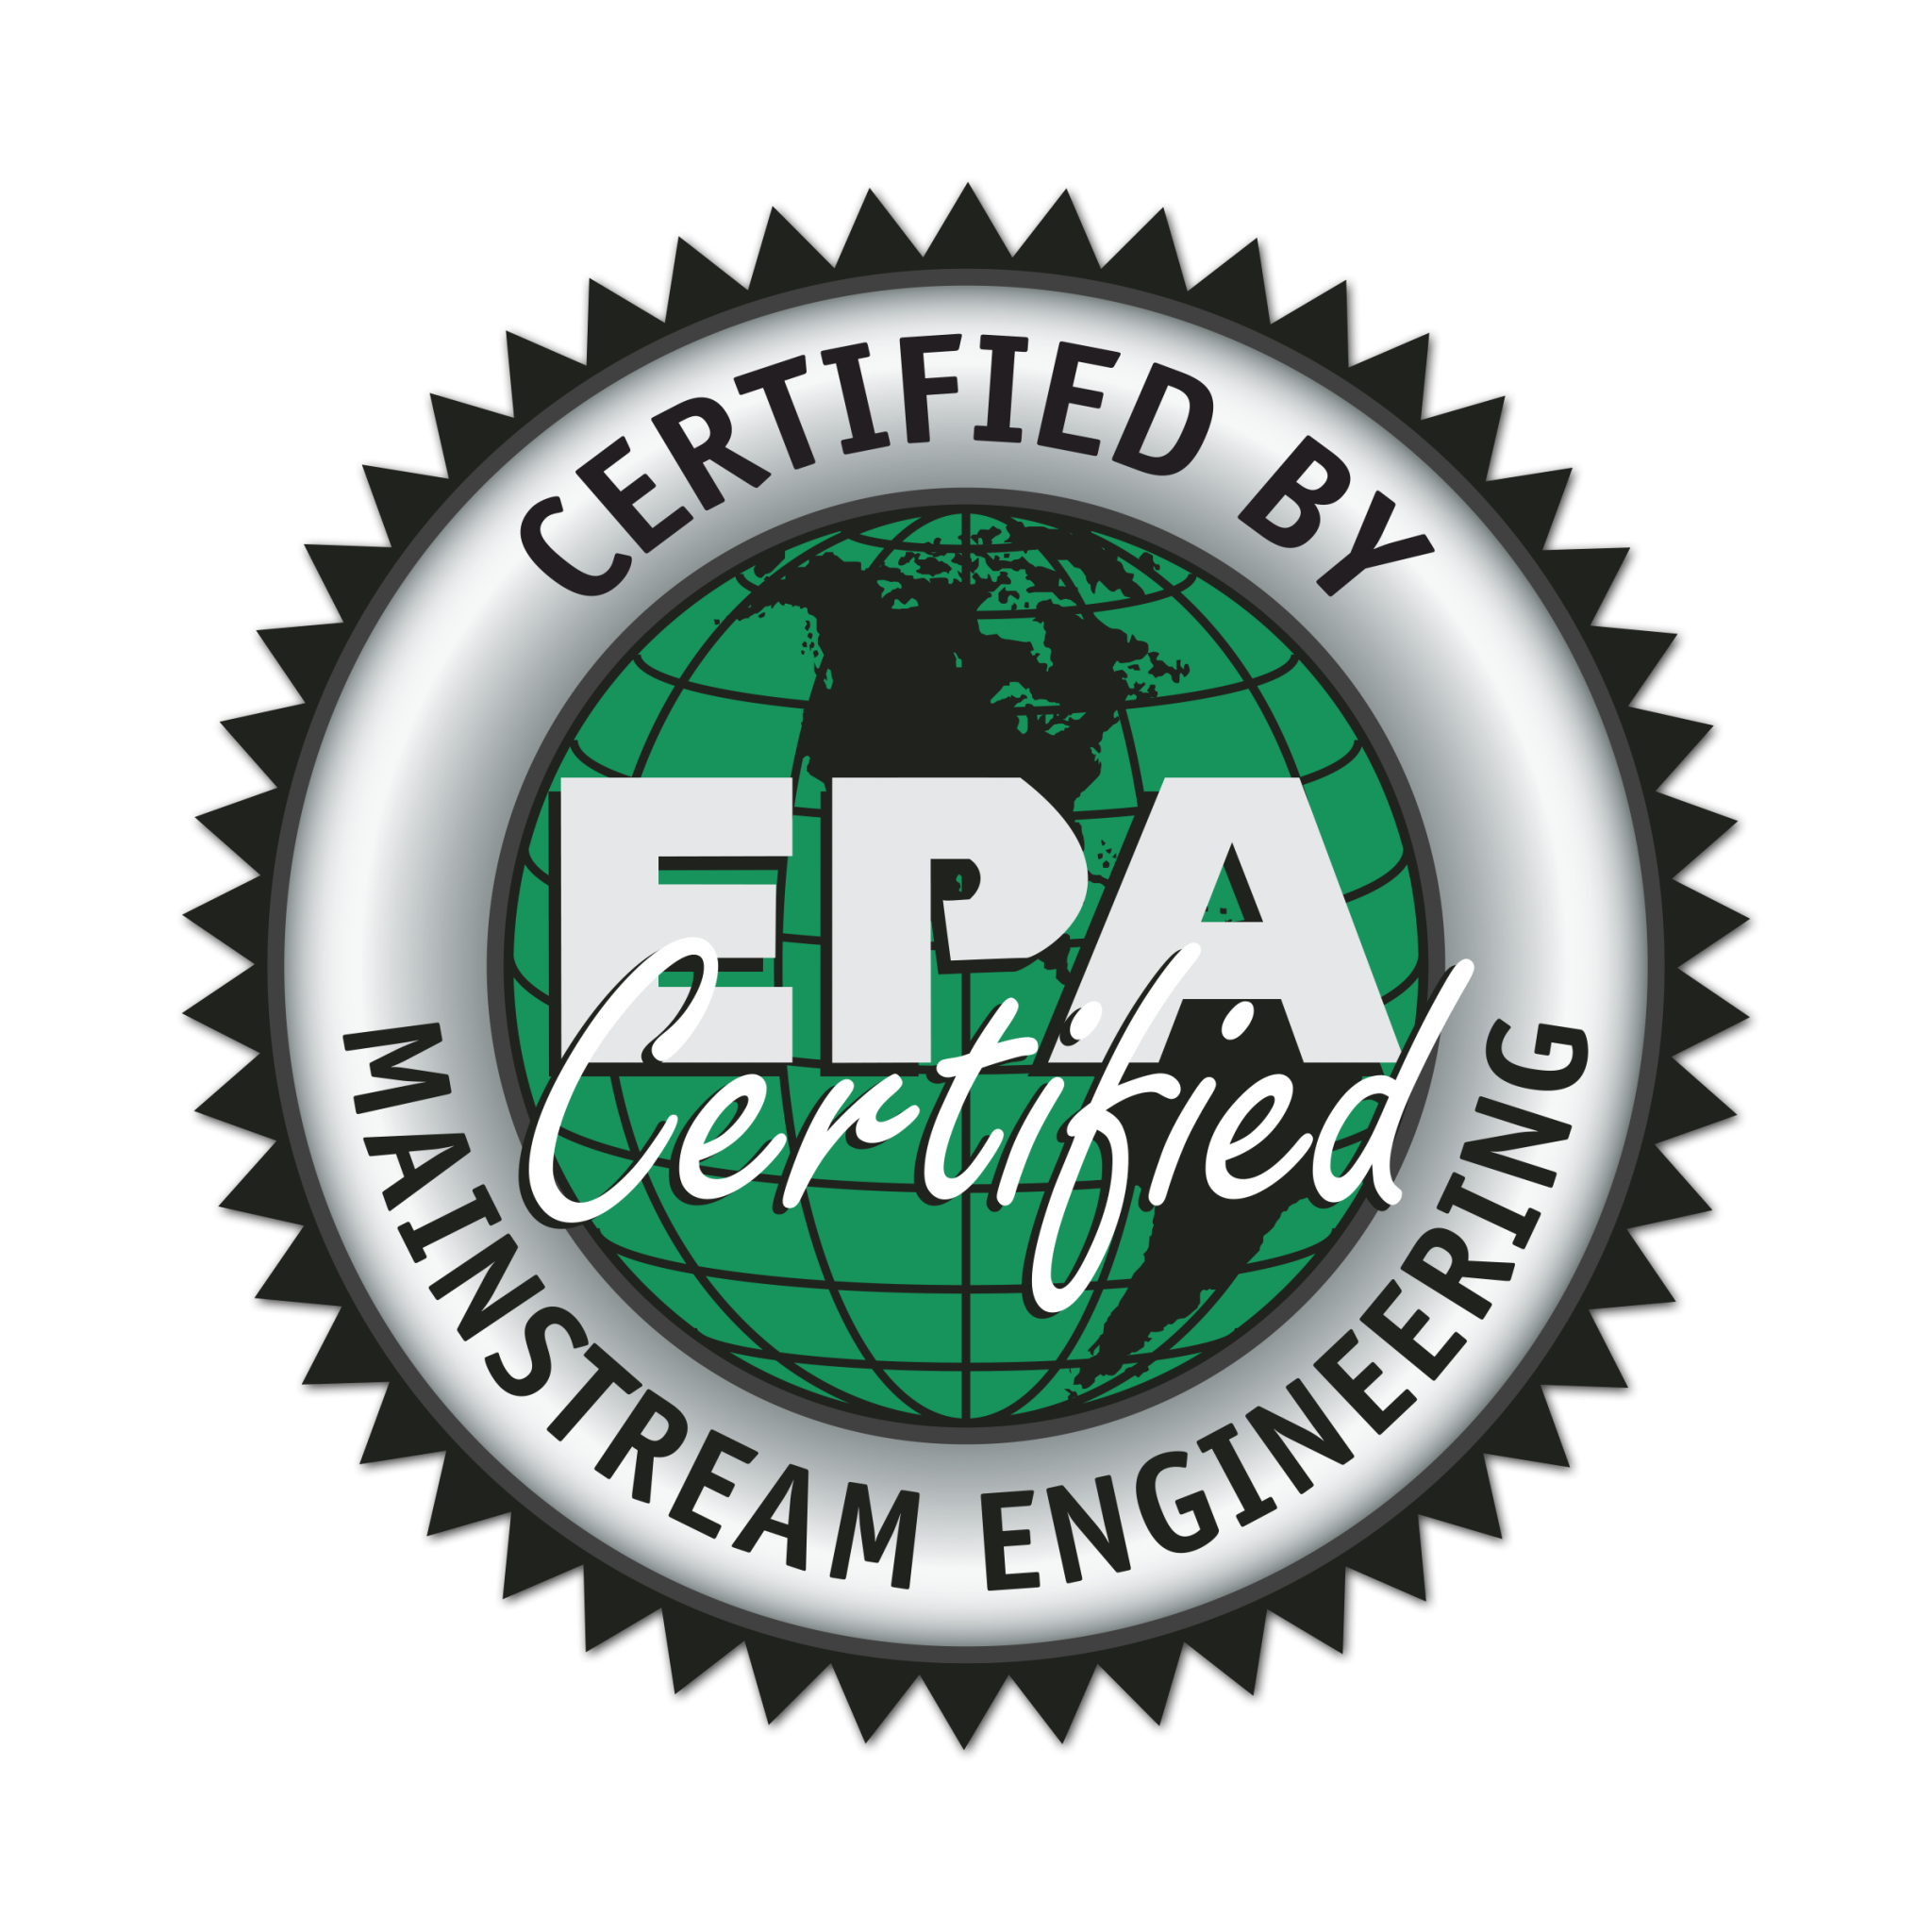 EPA 609 MVAC Certification Get The Process Started Mainstream Eng.